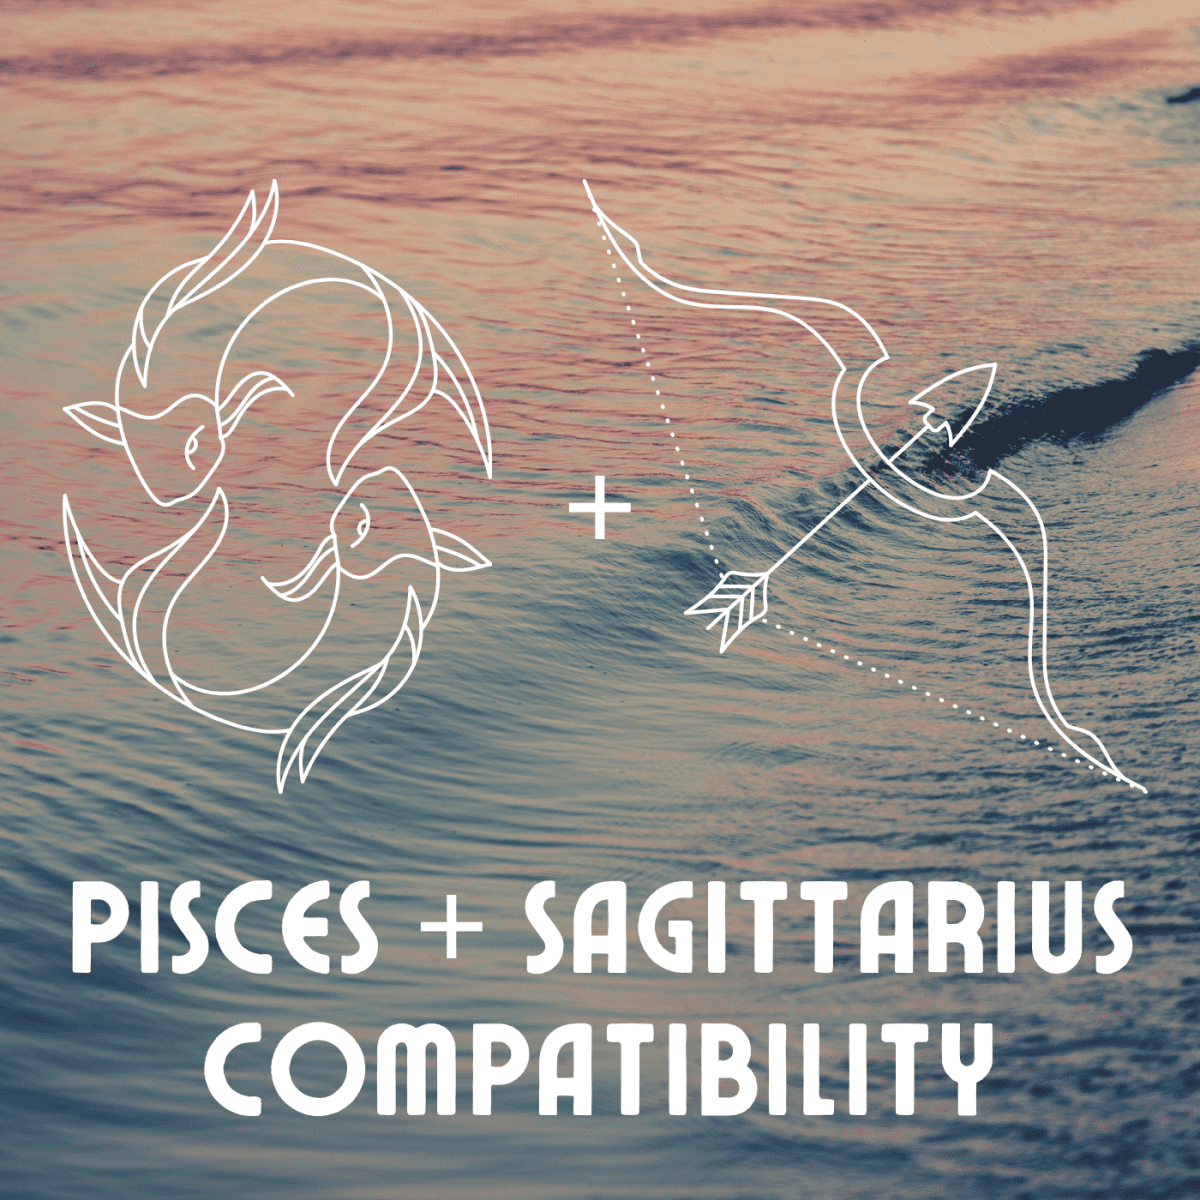 Pisces and sagittarius in bed